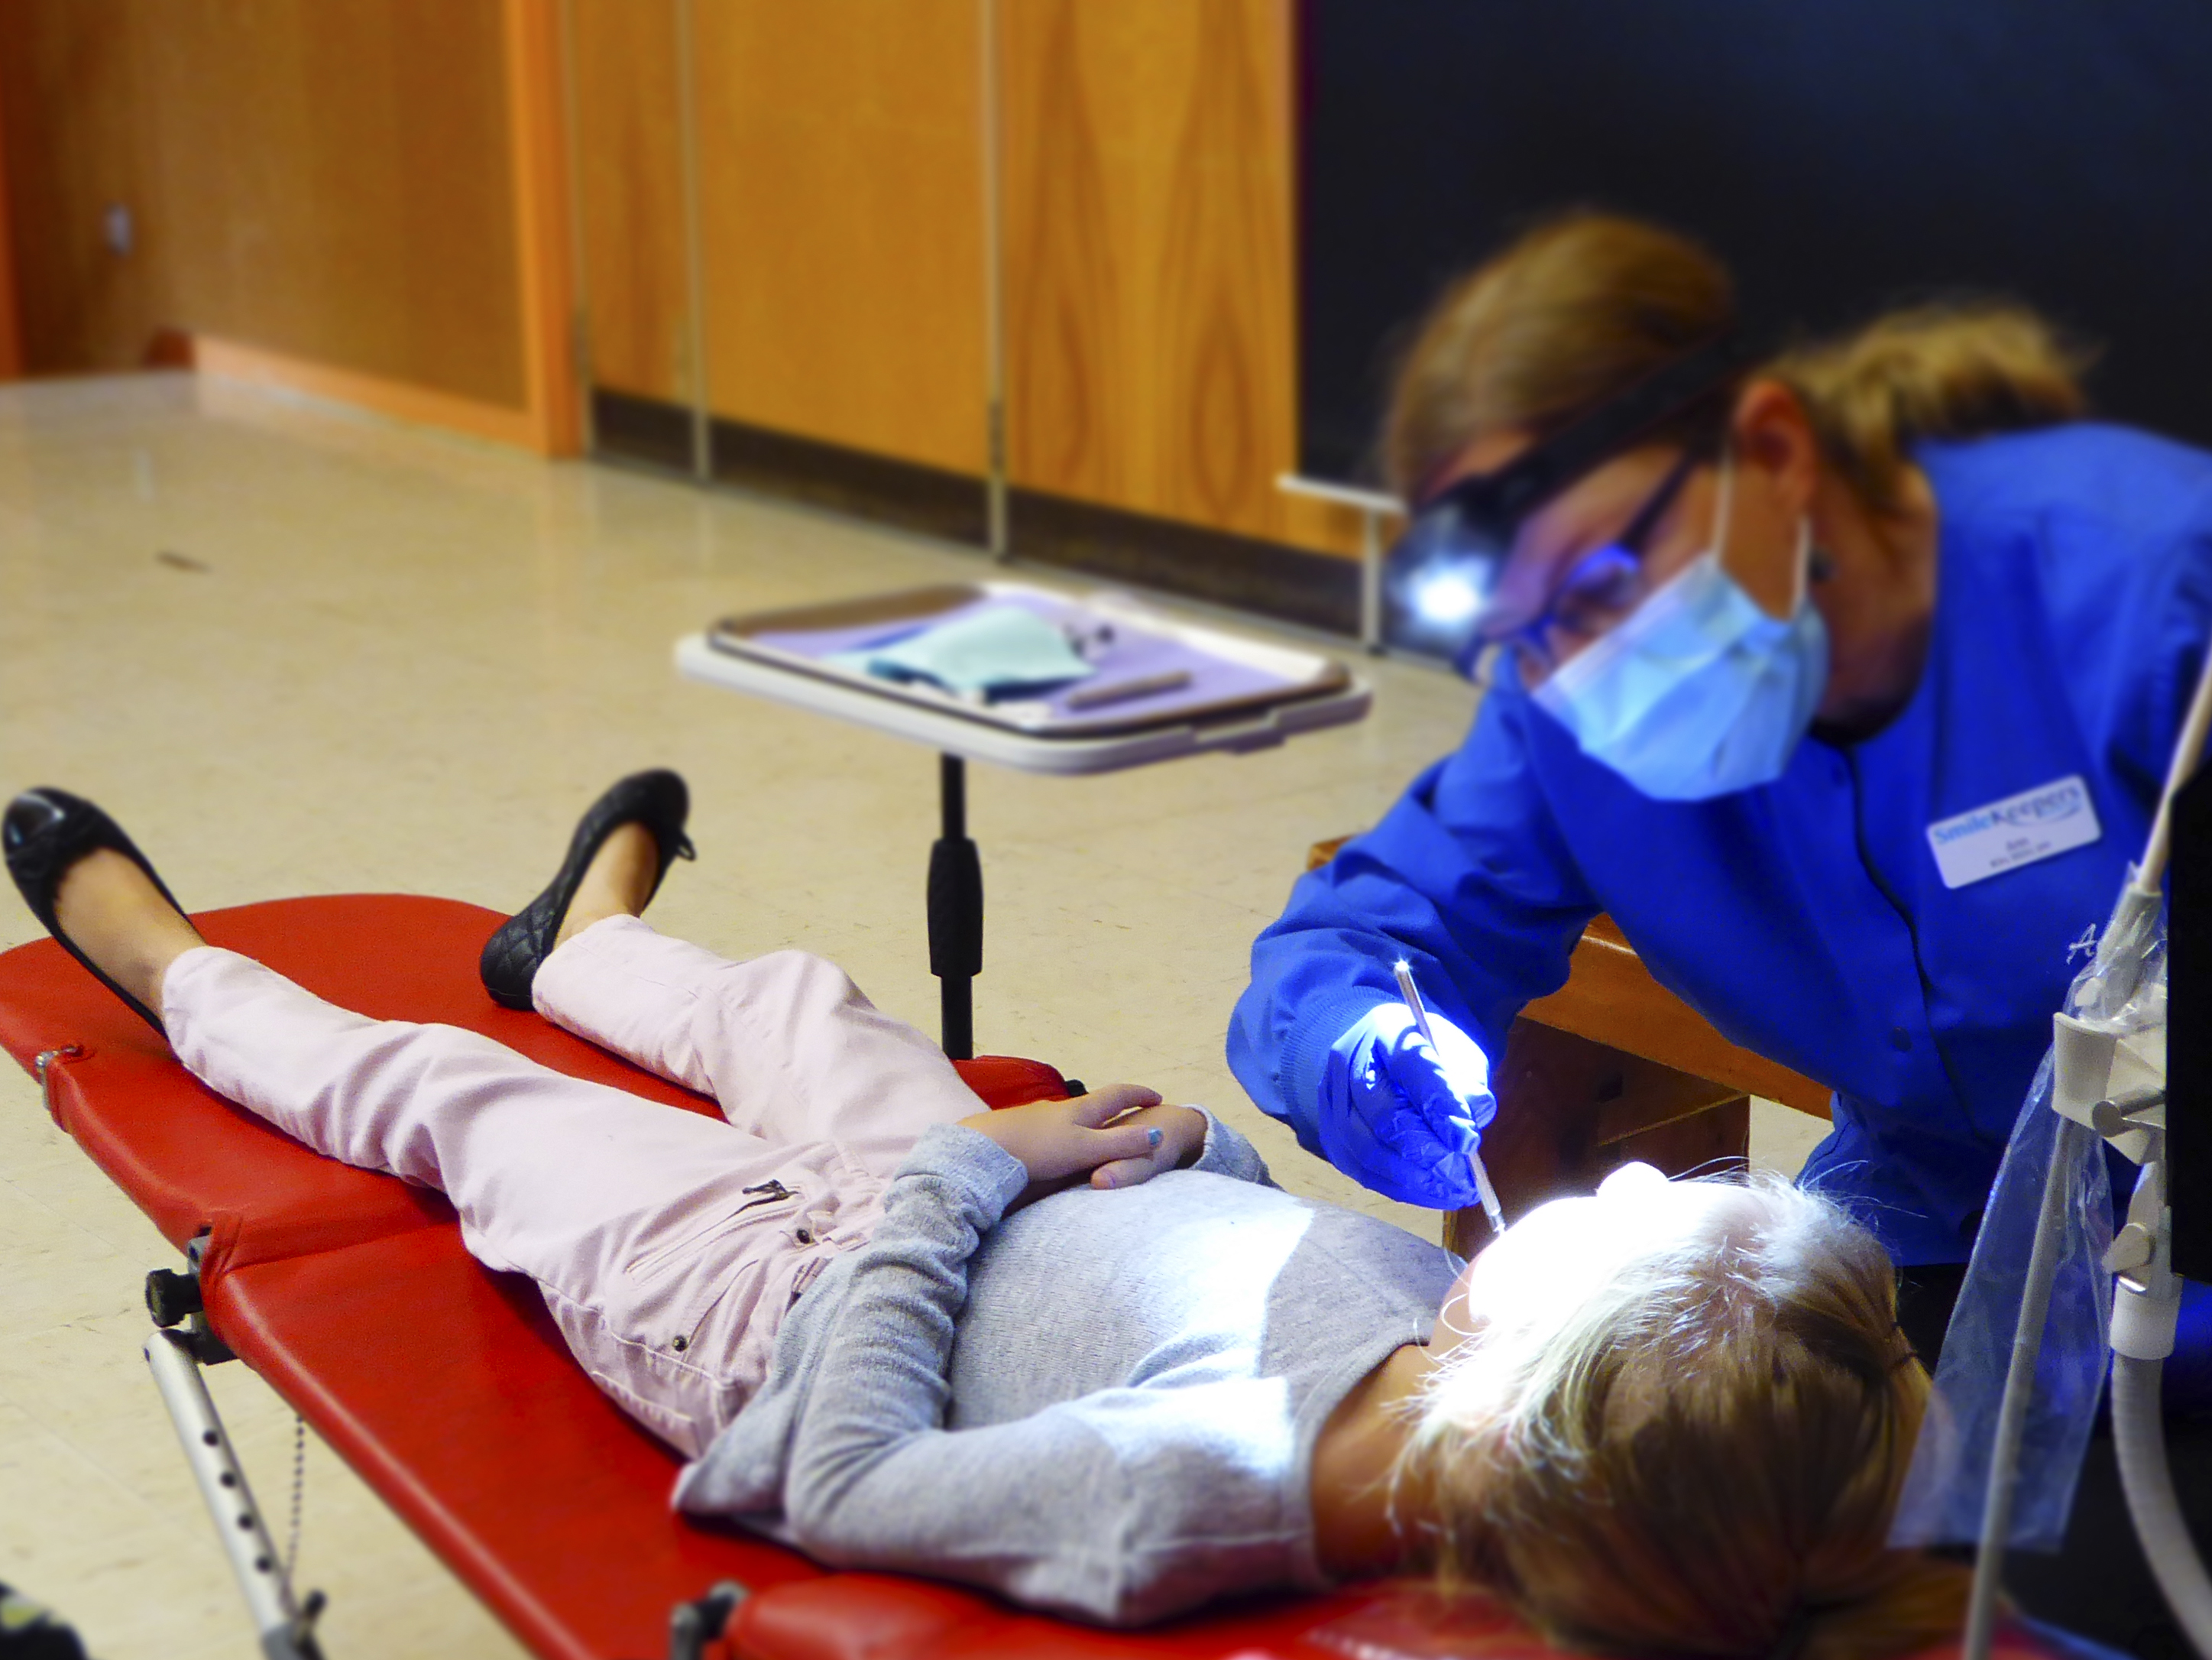 dental visits to schools